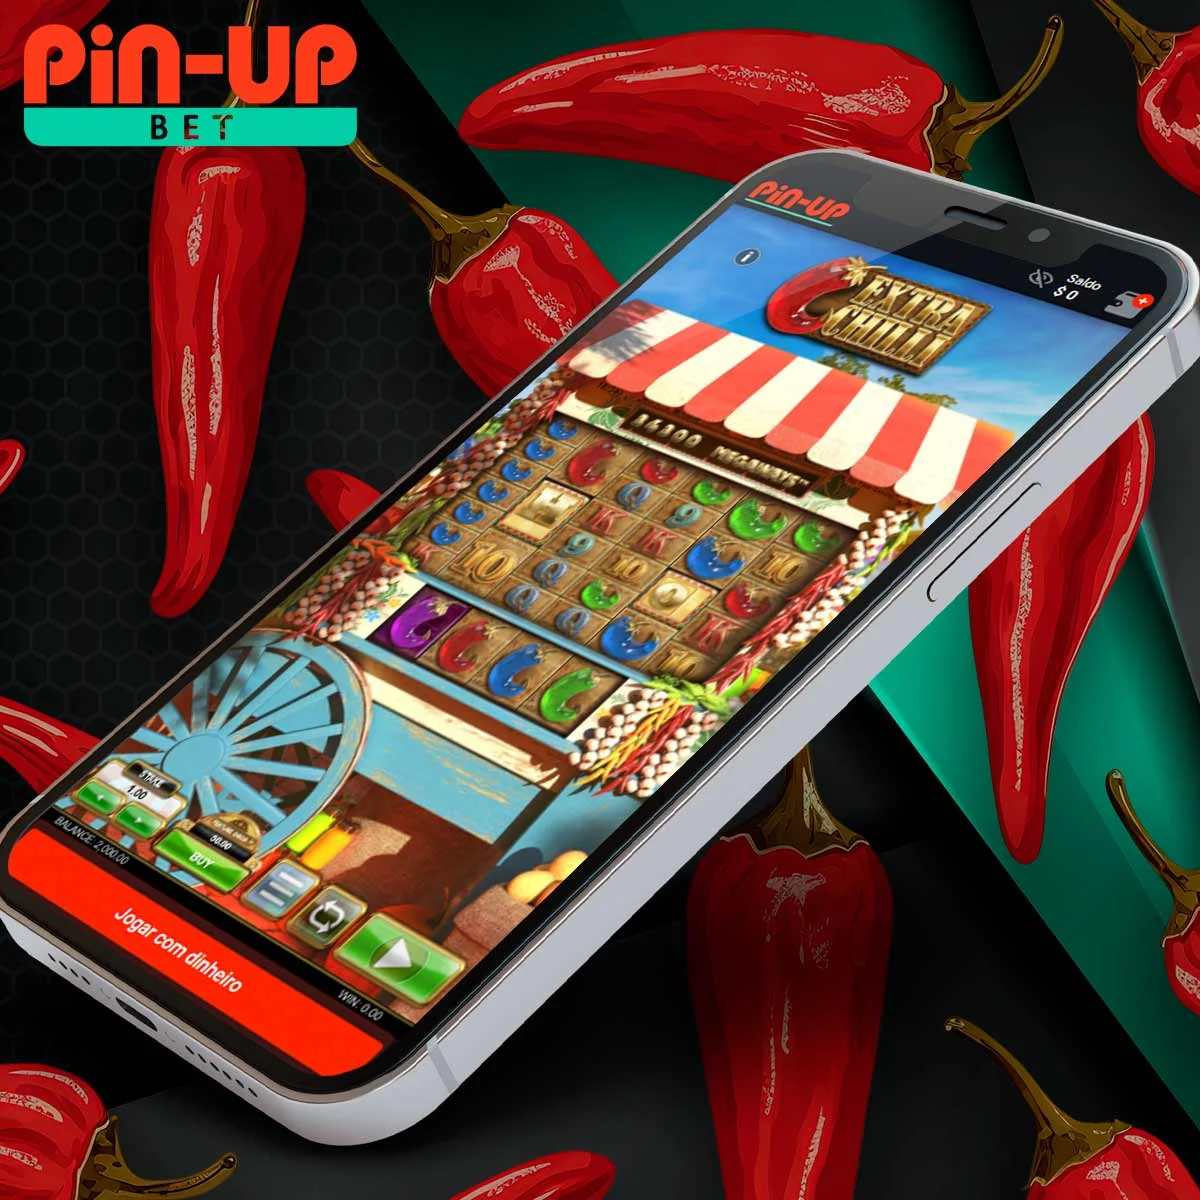 Jogo Extra Chilli Megaways no aplicativo Pin Up no mercado brasileiro